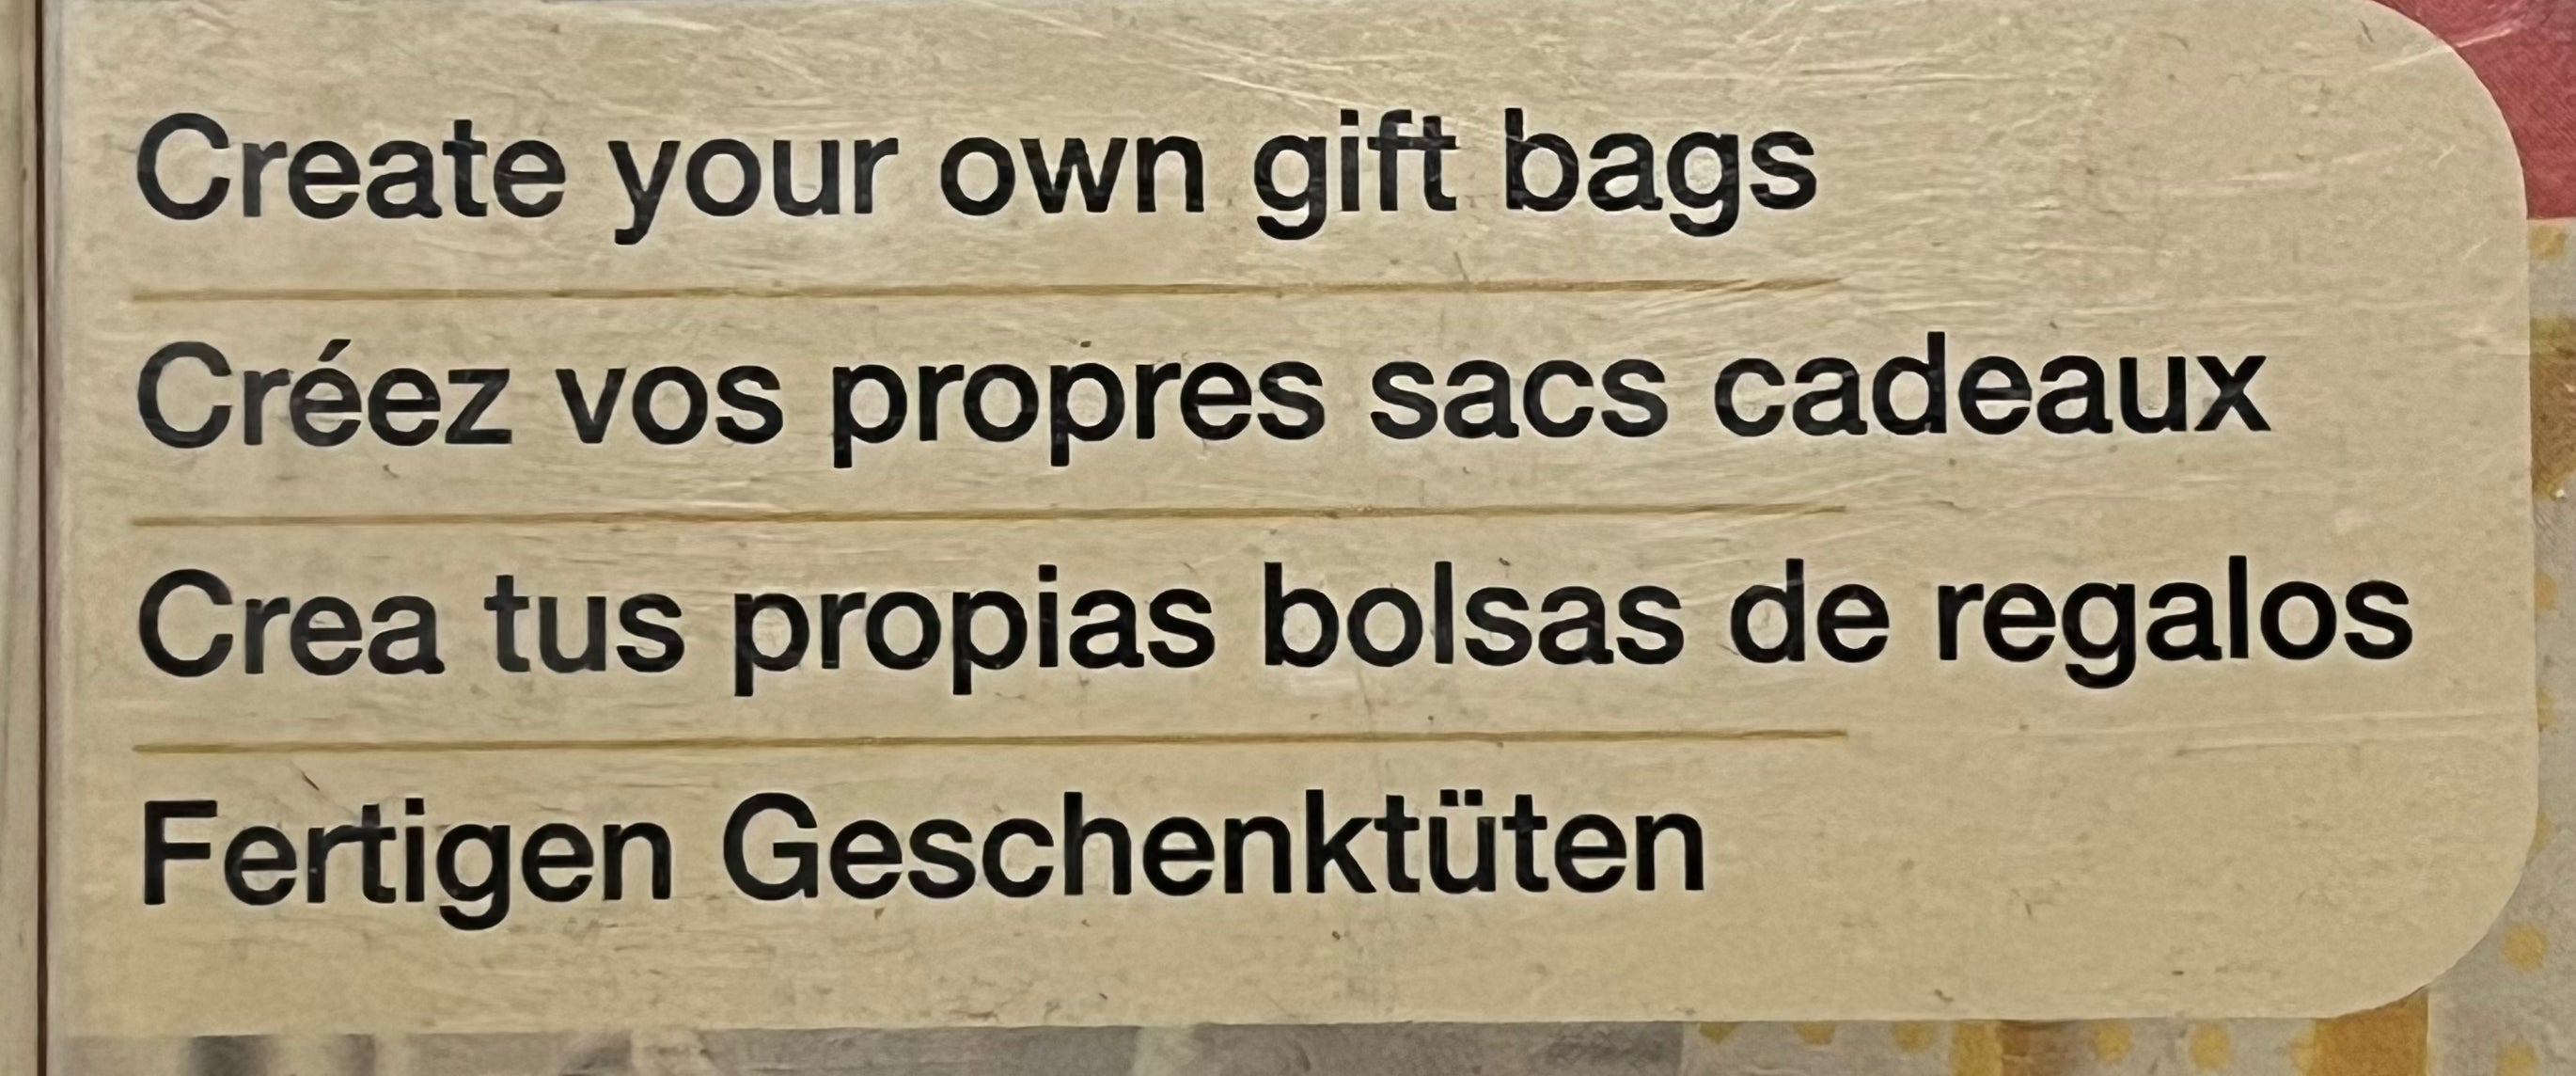 Gift bag punch board